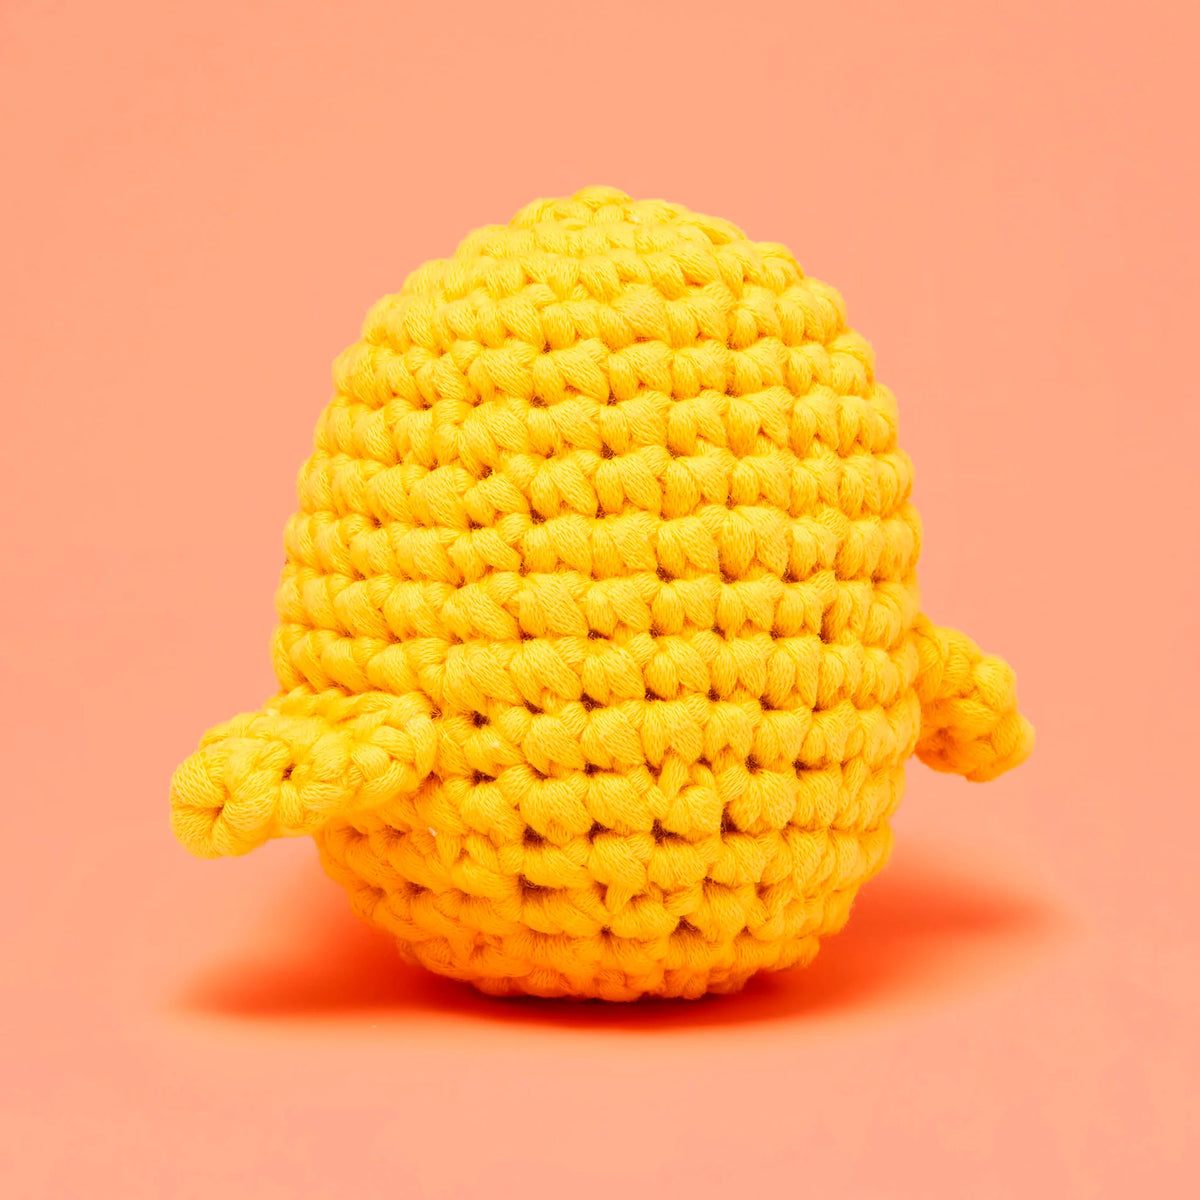 Kiki the Chick - Crochet Kit